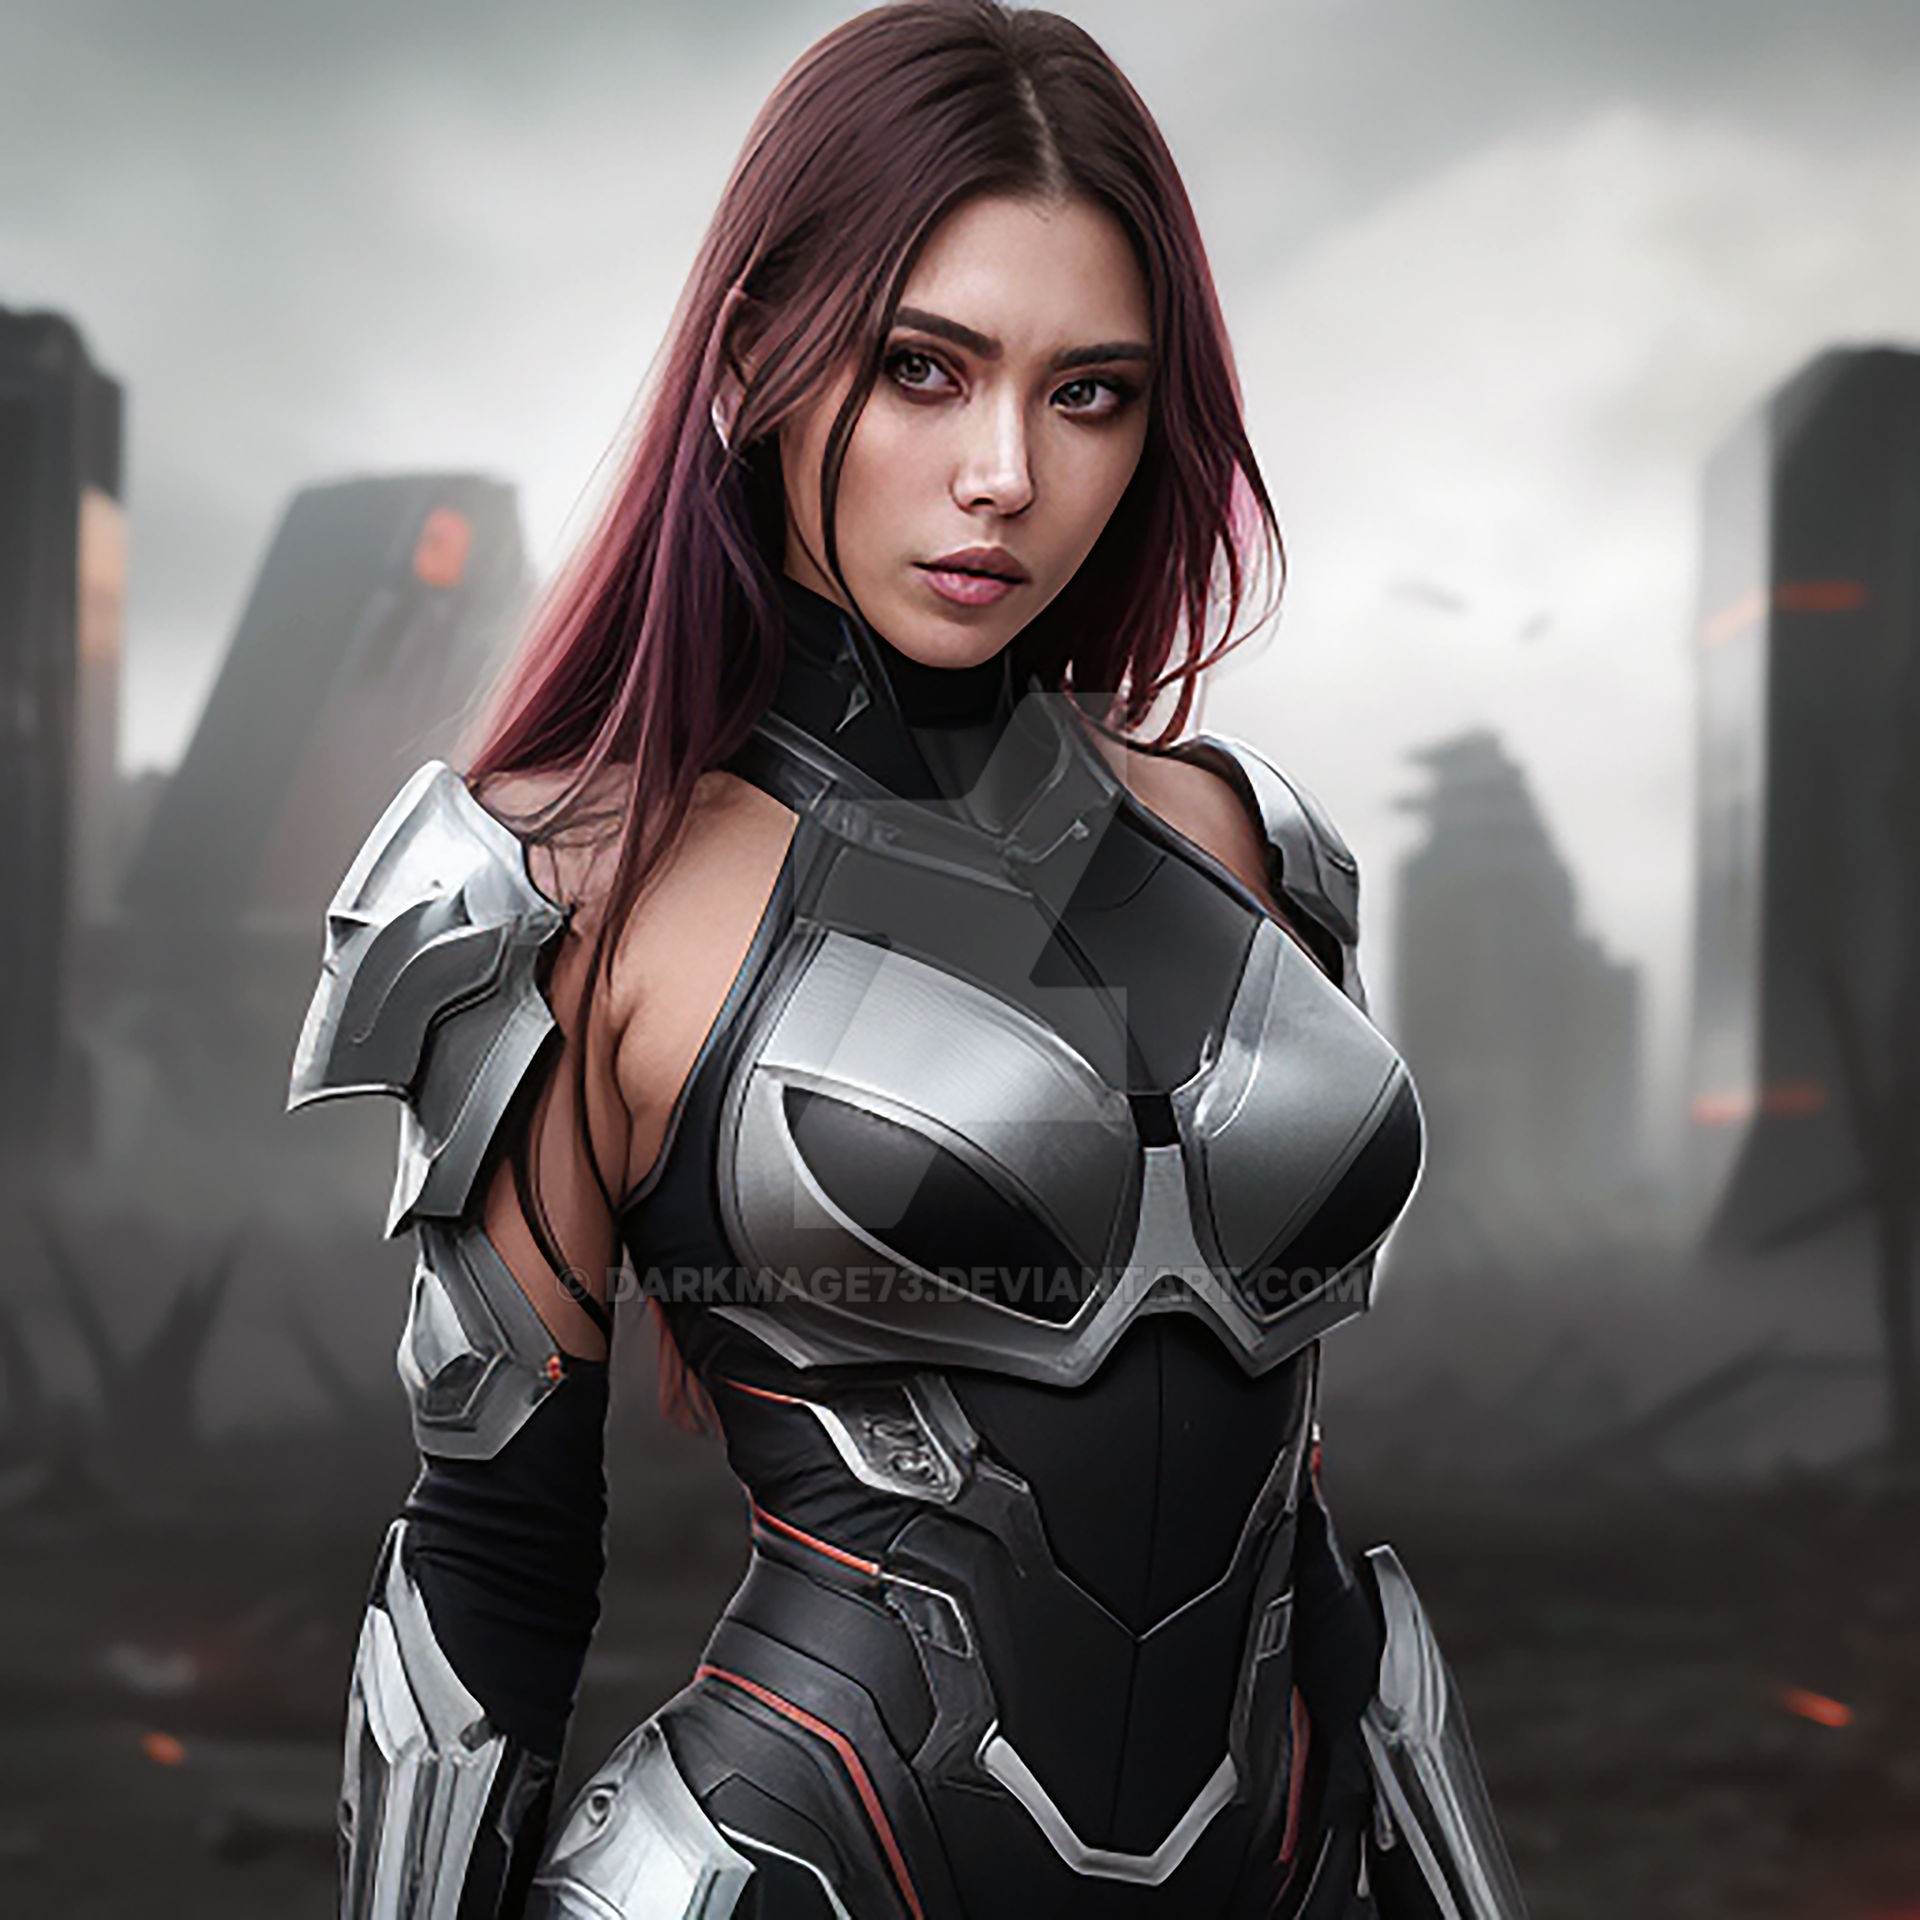 Armored girl 15 by DarkMage73 on DeviantArt